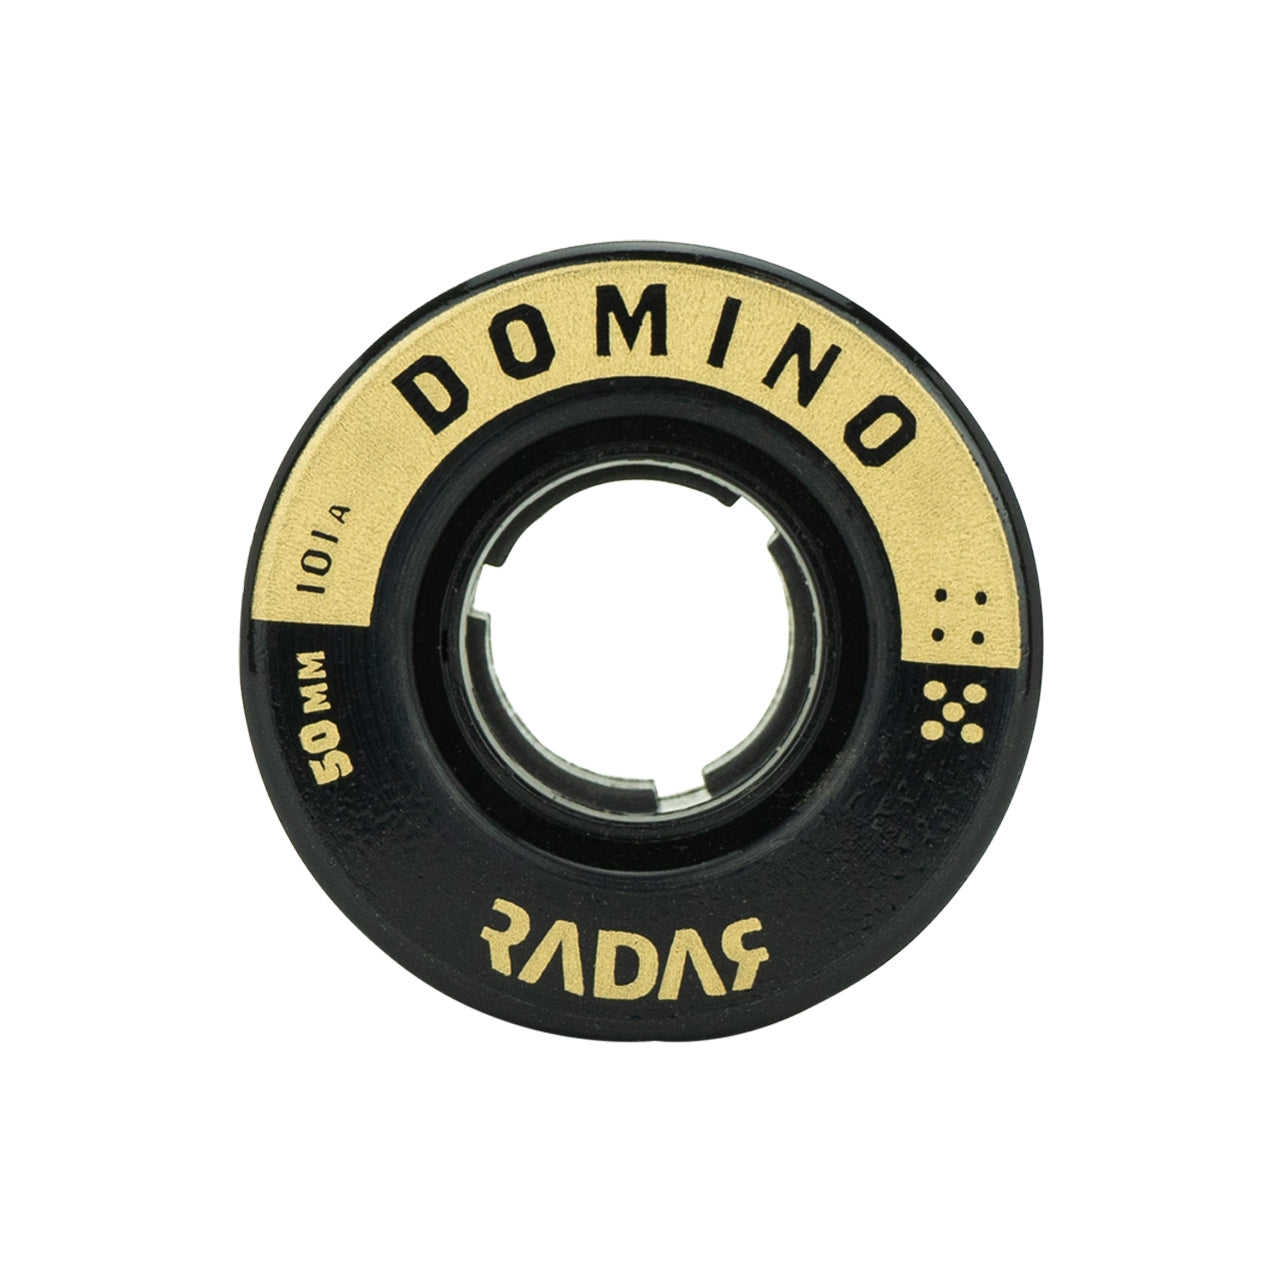 Radar Domino Black/Gold Wheels 50mm 101a - Set of 4